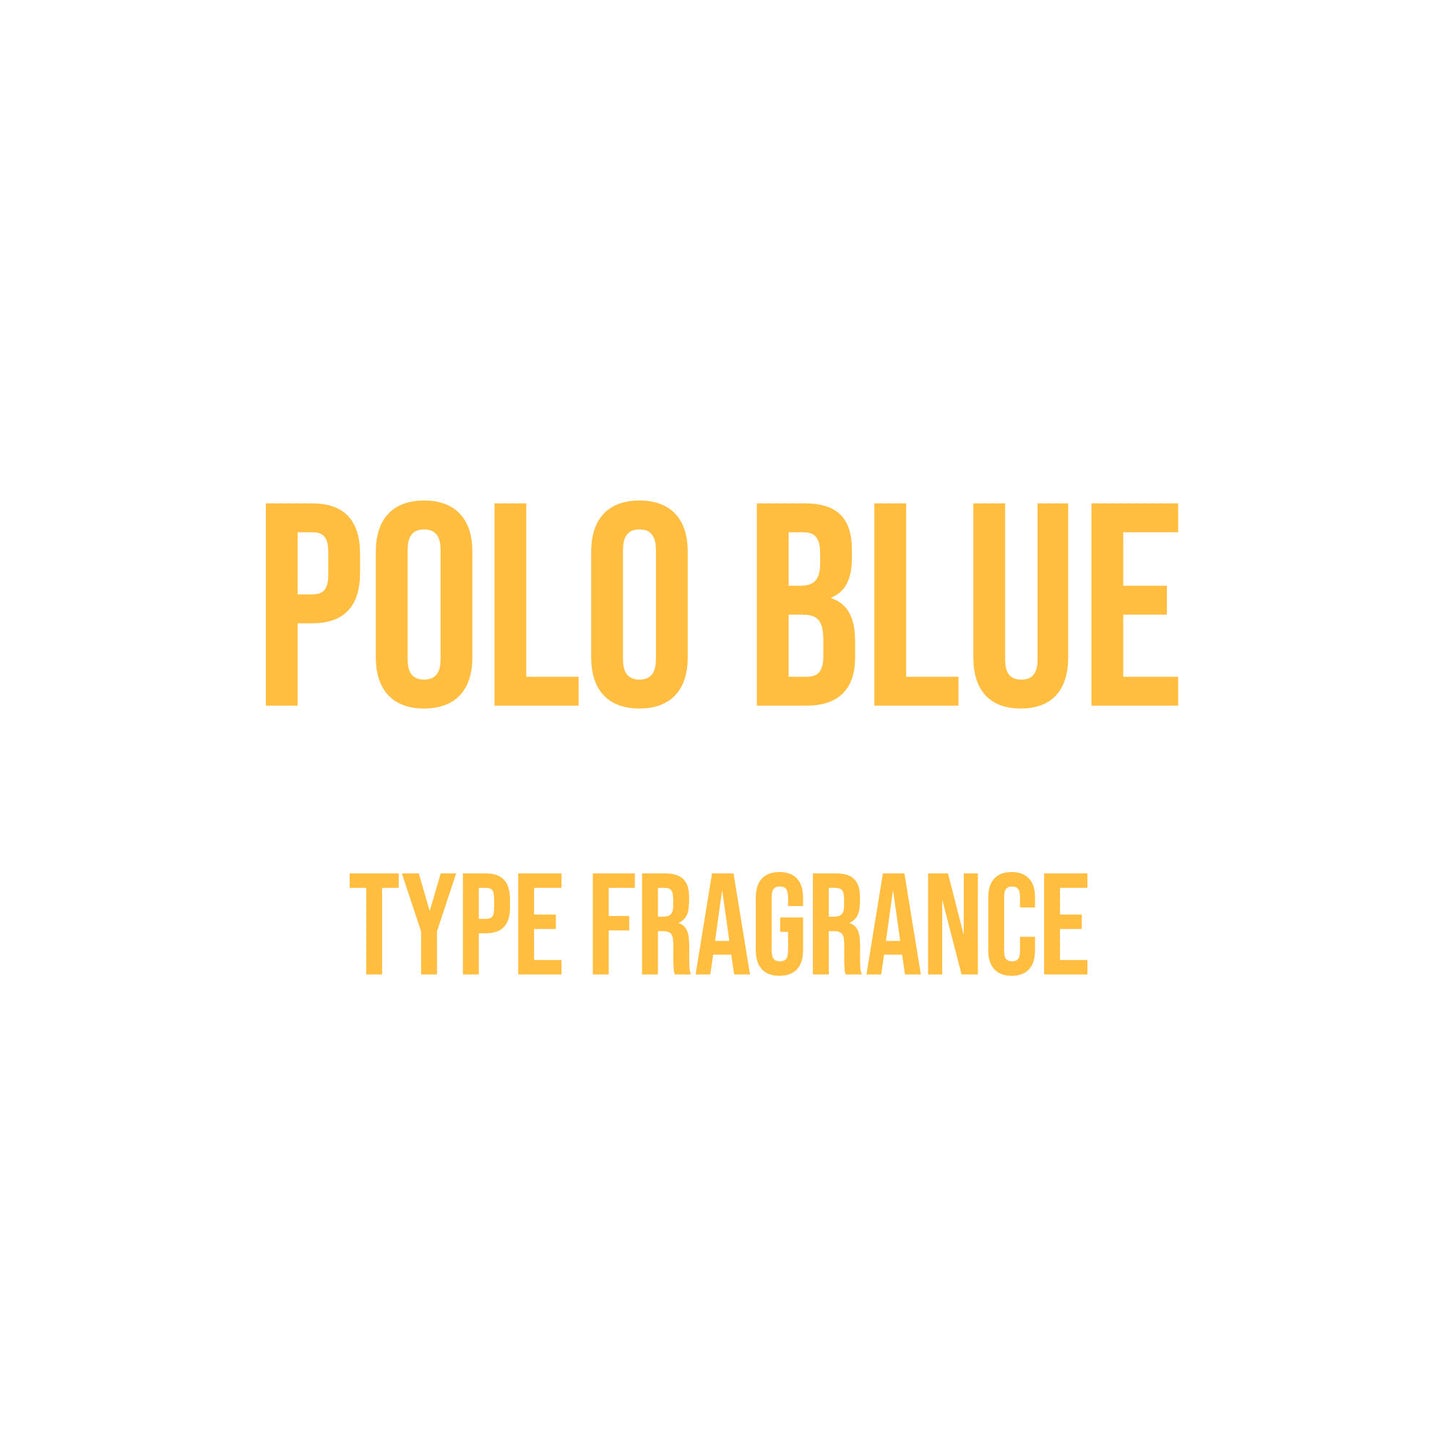 Polo Blue Type Fragrance